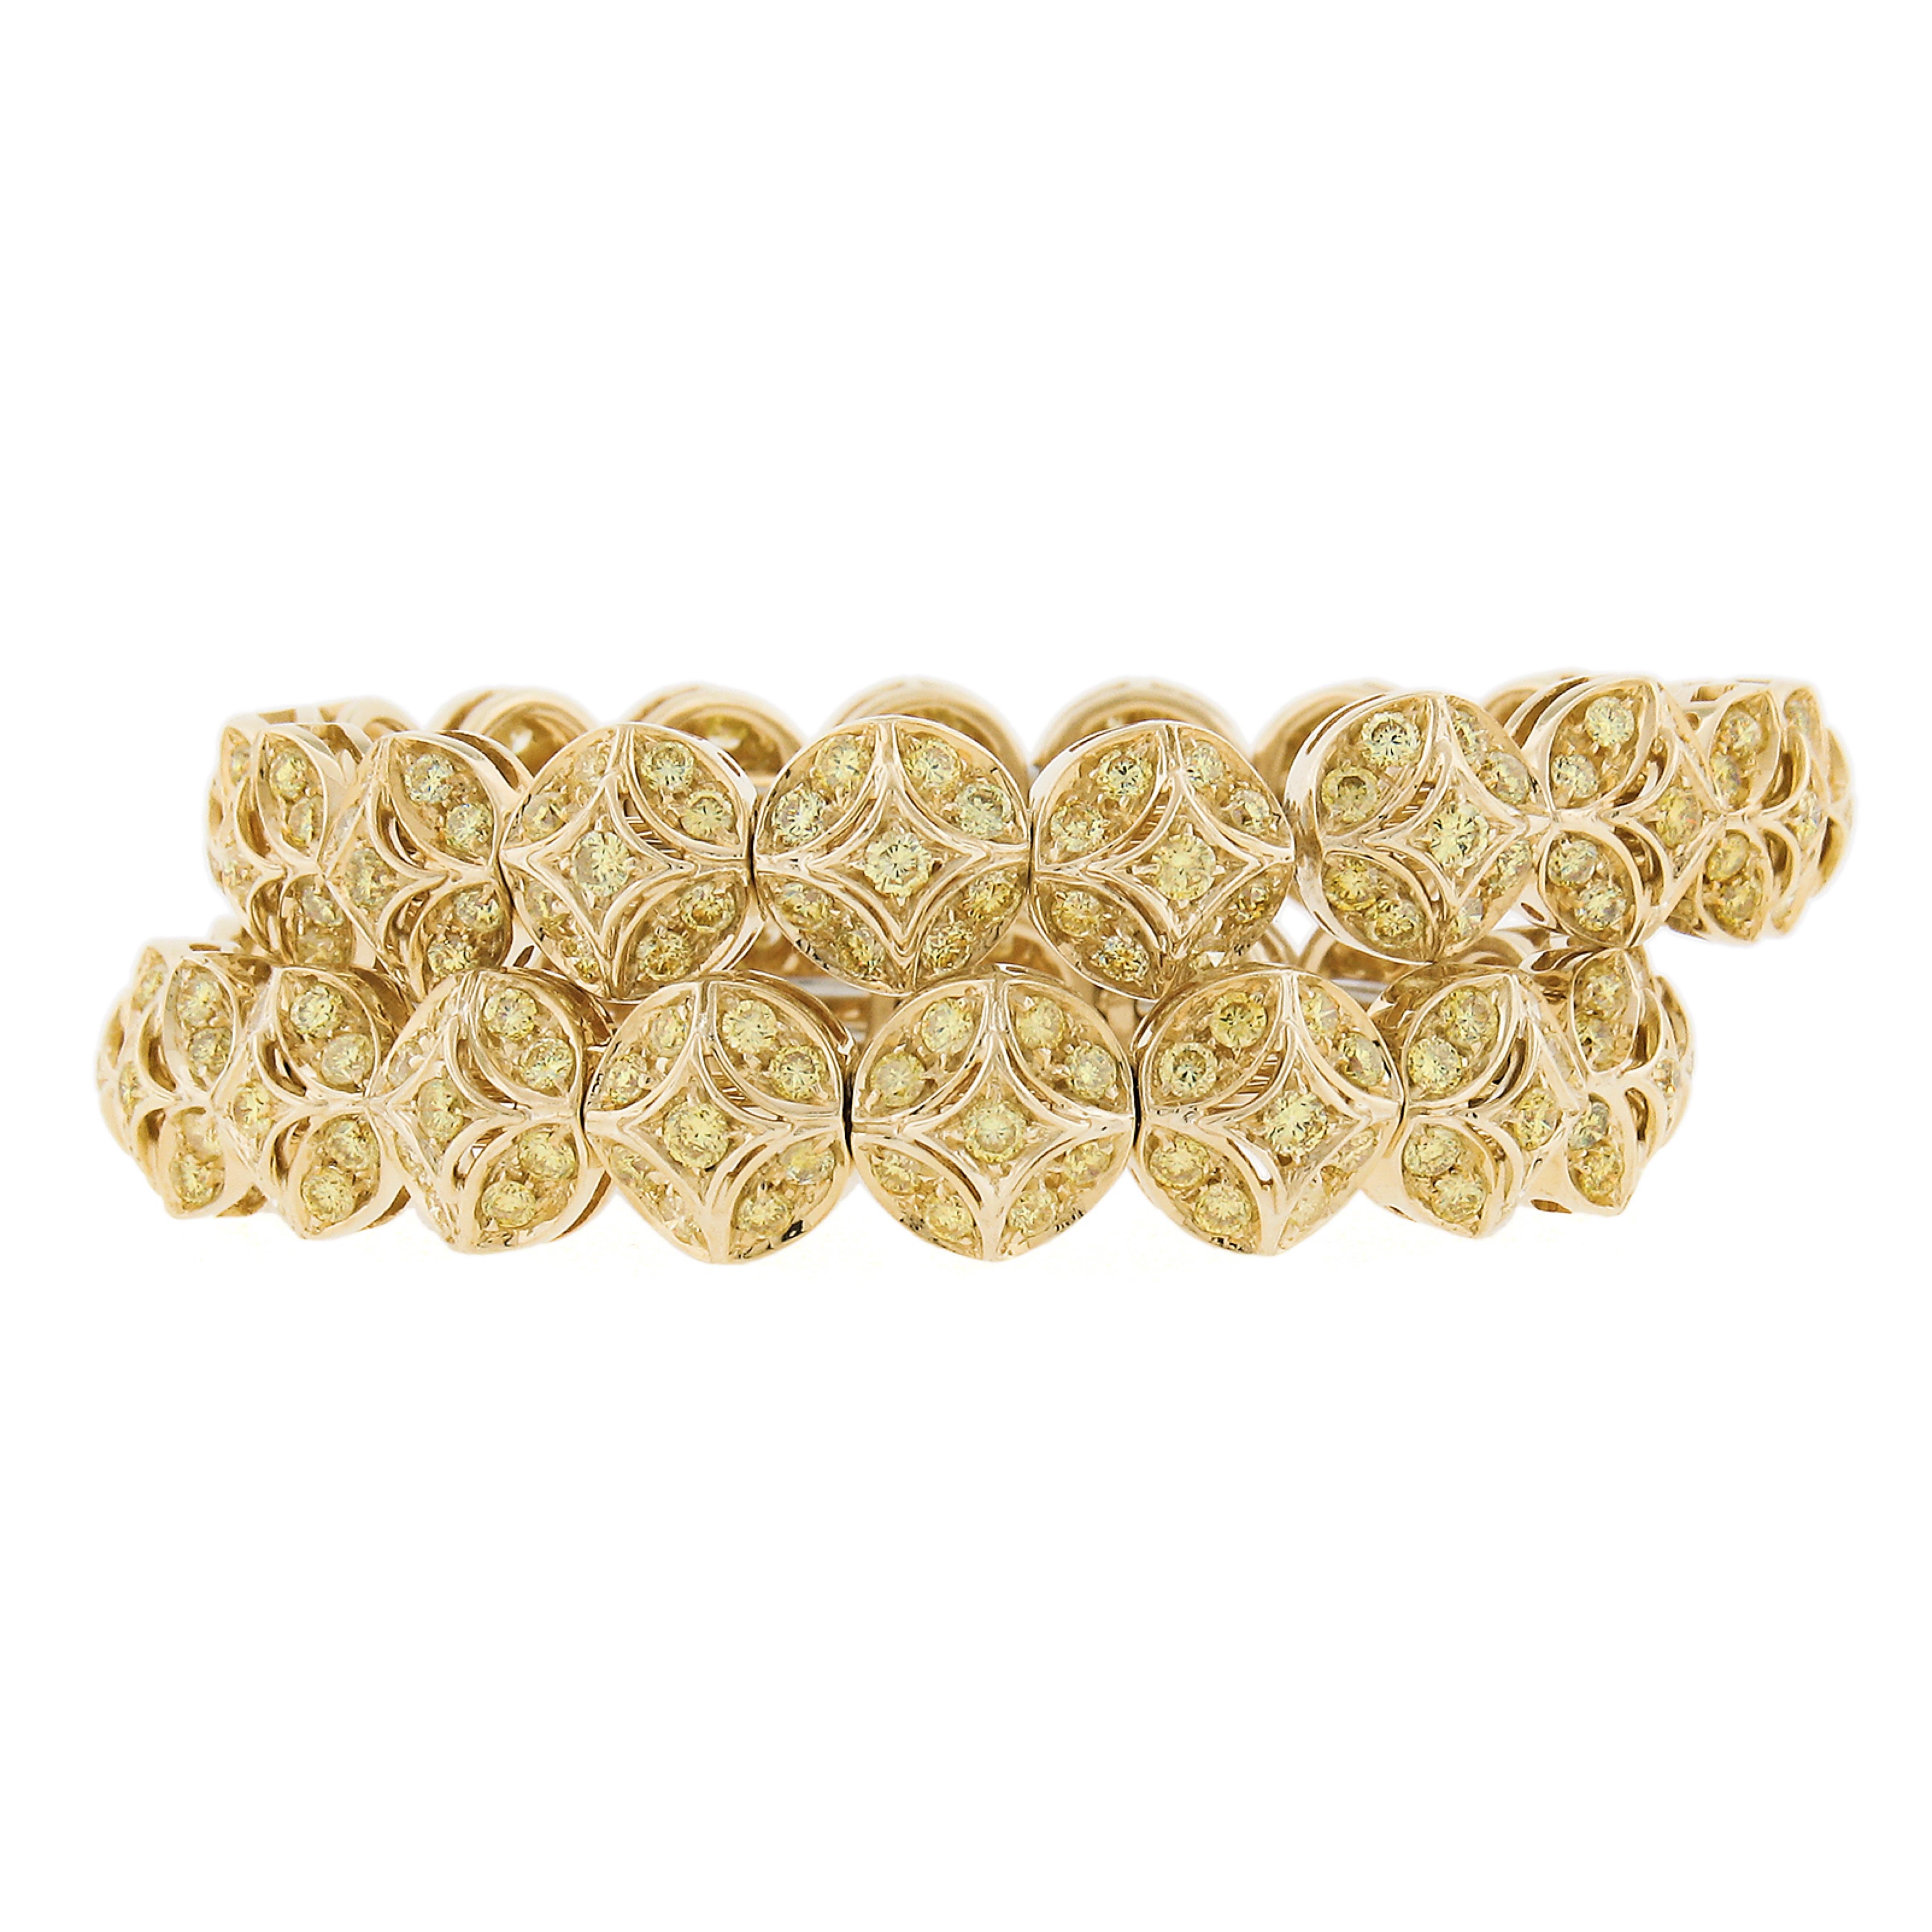 RCM Pair 18k Gold 12ctw GIA Fancy Yellow Diamond Flexible Cuff Bangle Bracelets In Excellent Condition For Sale In Montclair, NJ